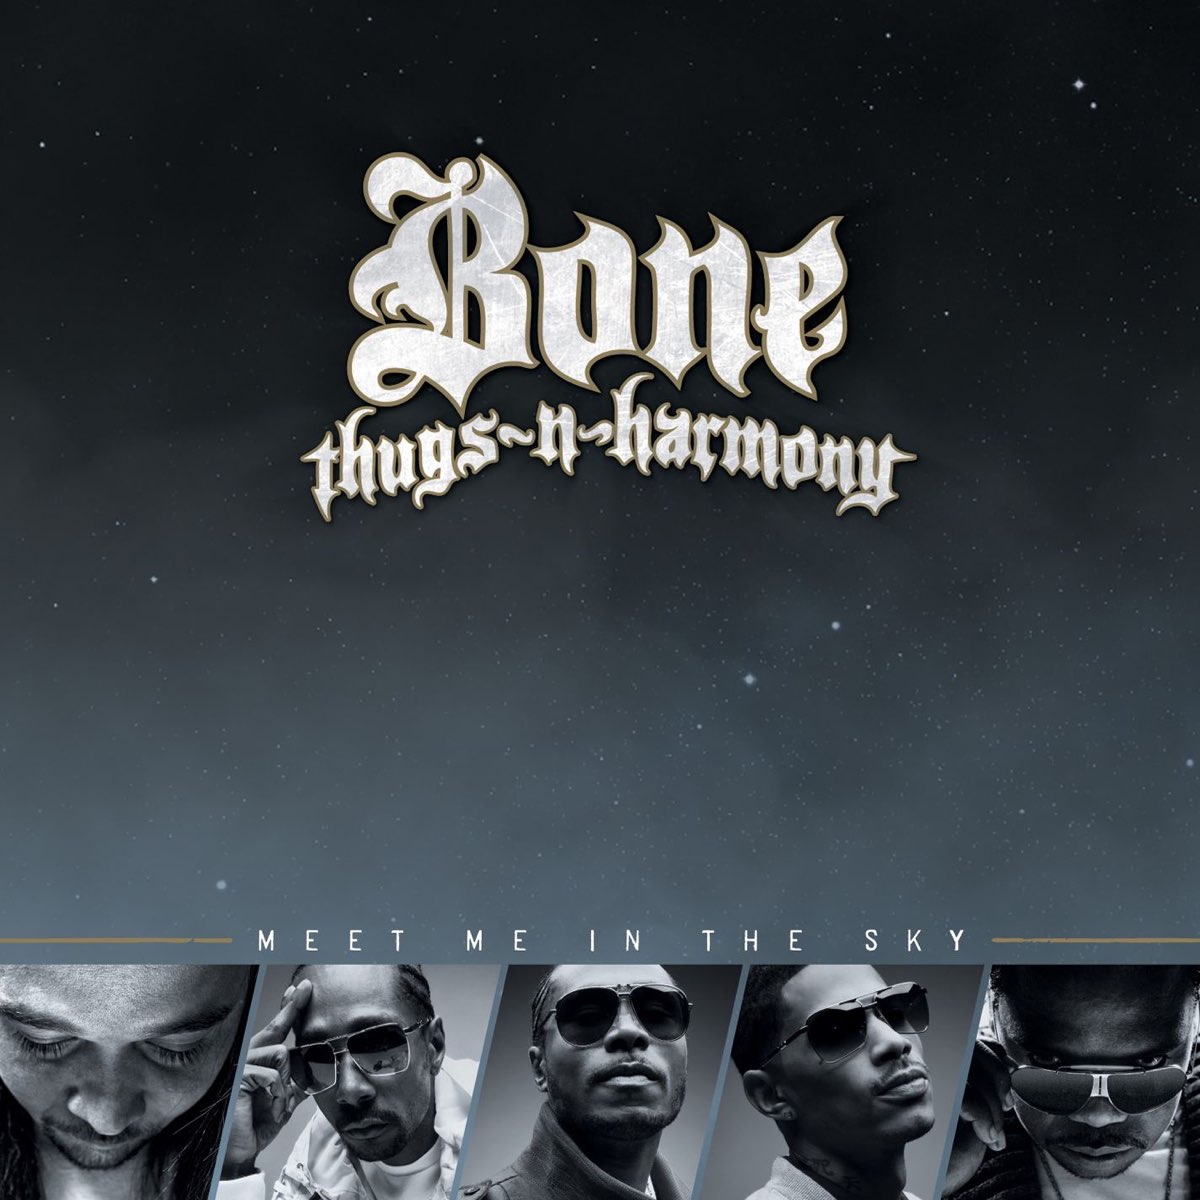 Bone n thugs